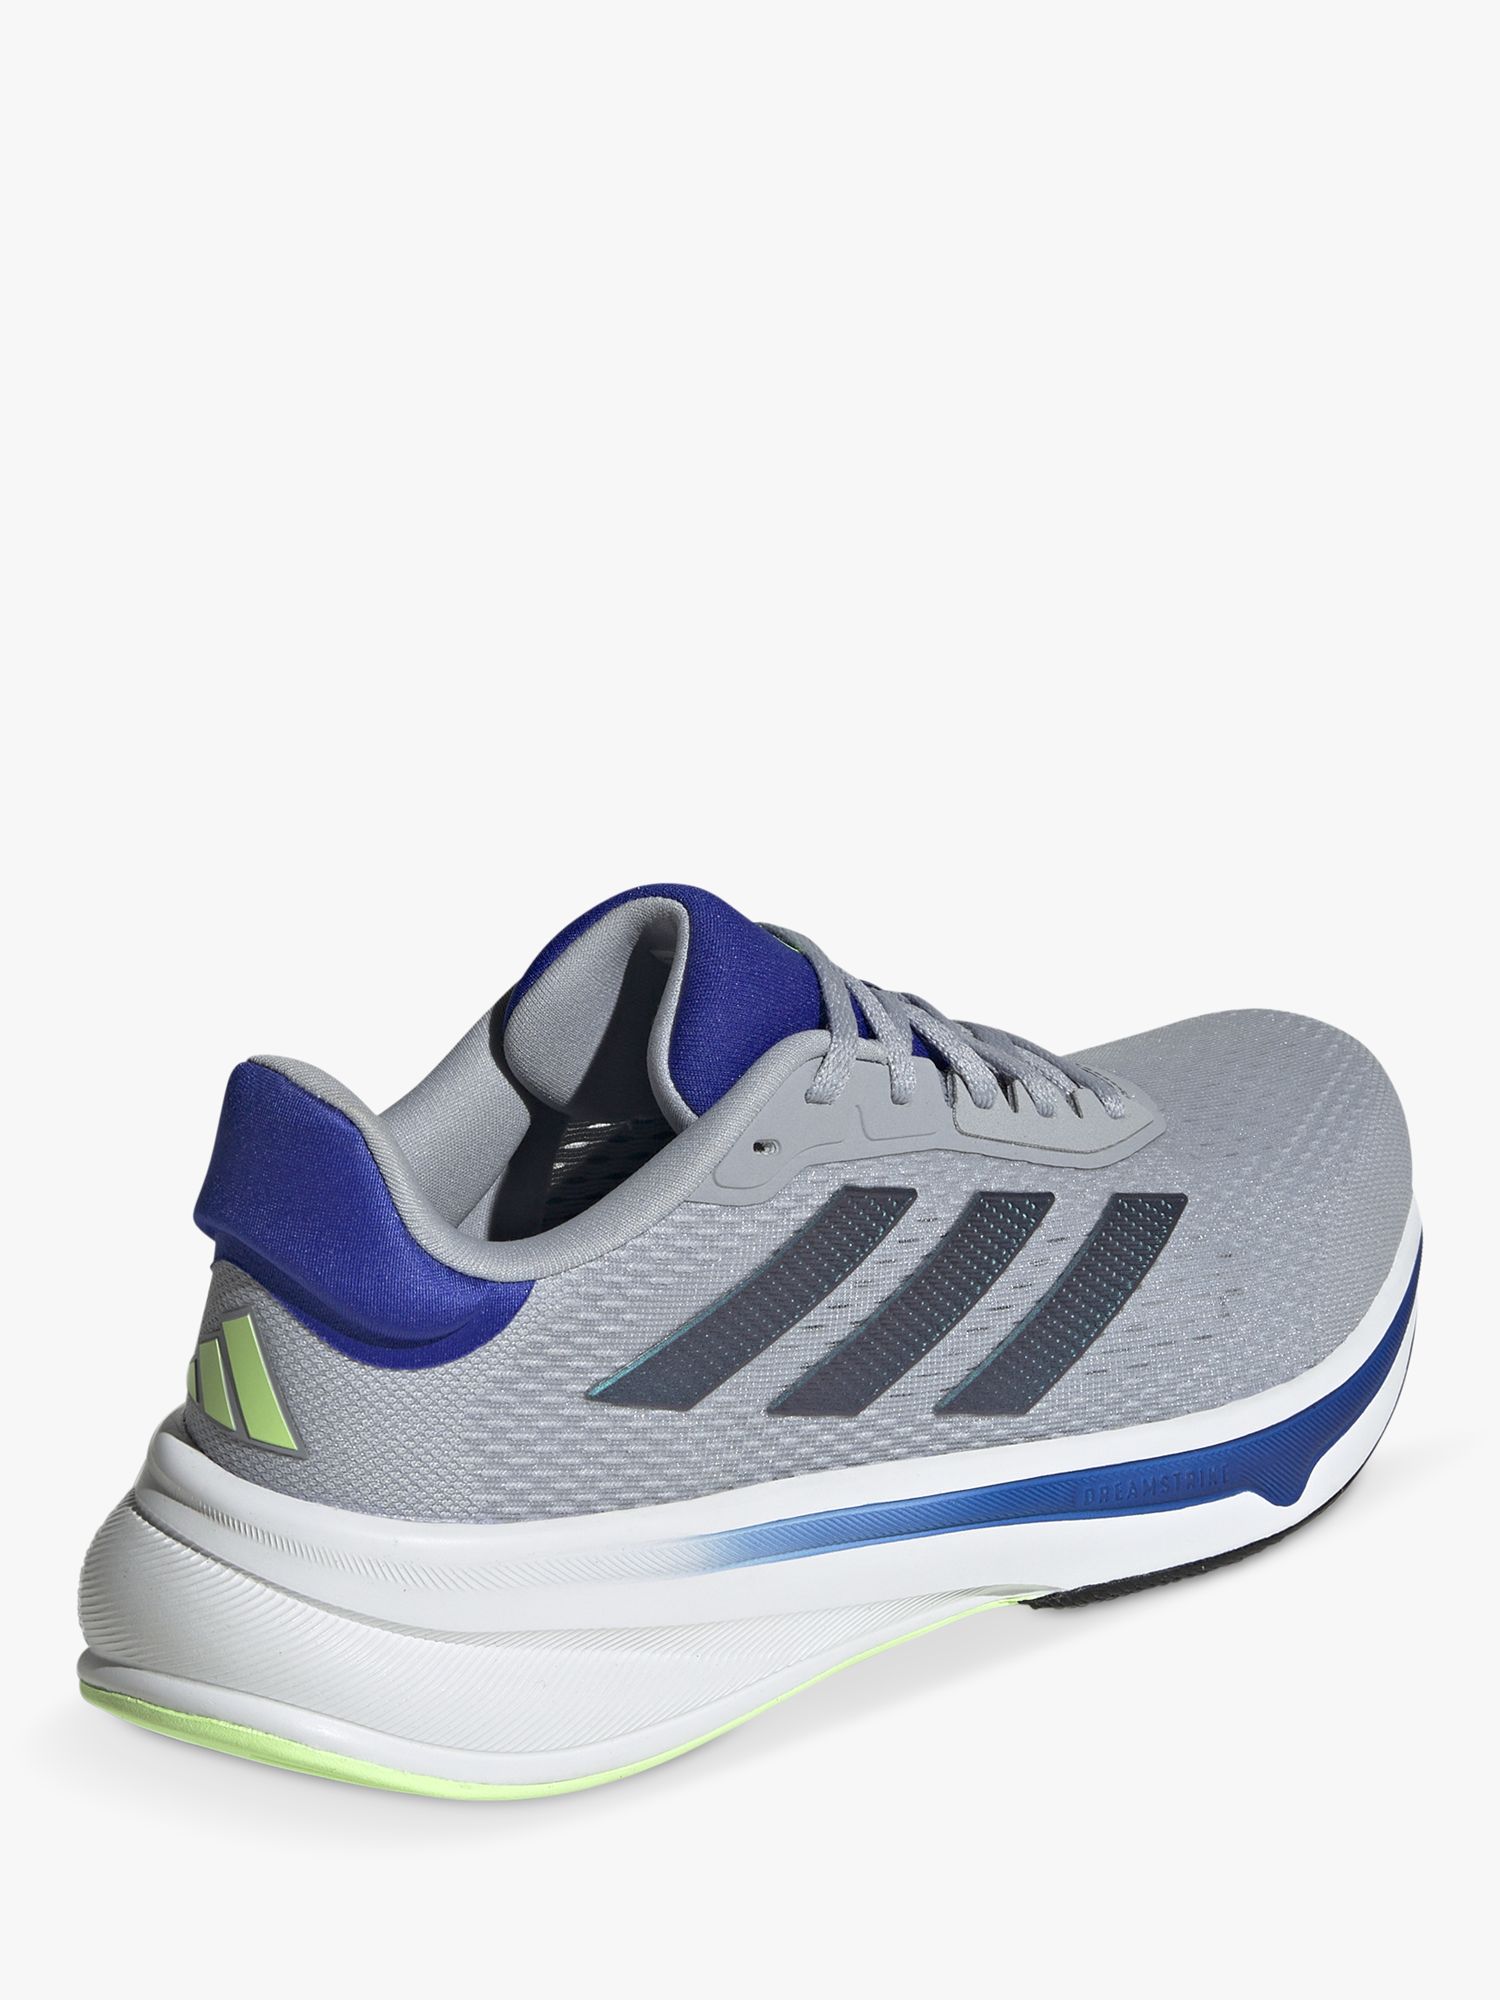 adidas Response Super Men's Running Shoes, Silver/Green, 8.5